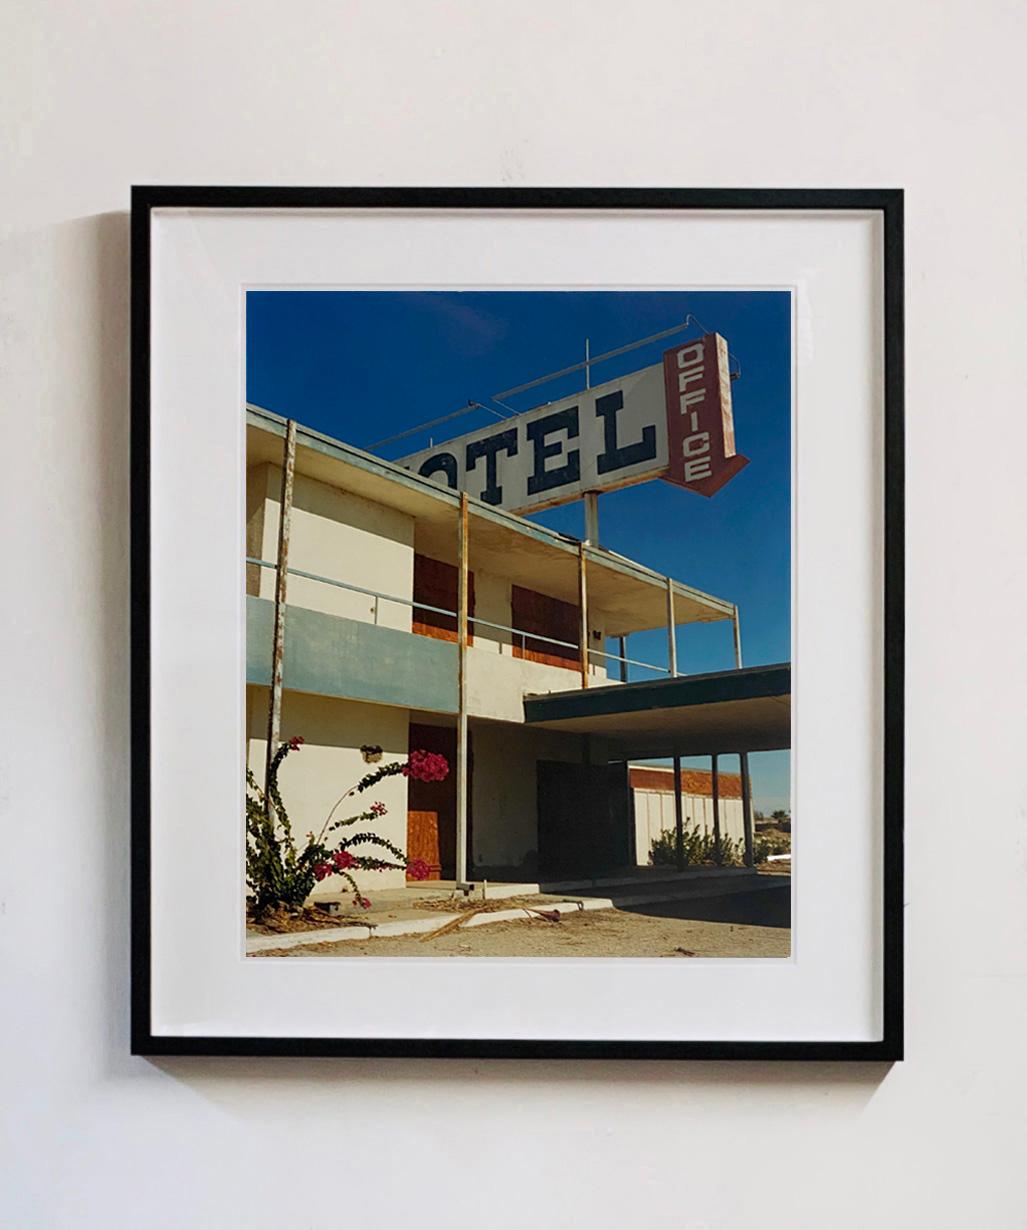 North Shore Motel Office II, Salton Sea, California - Architectural Color Photo - Photograph by Richard Heeps